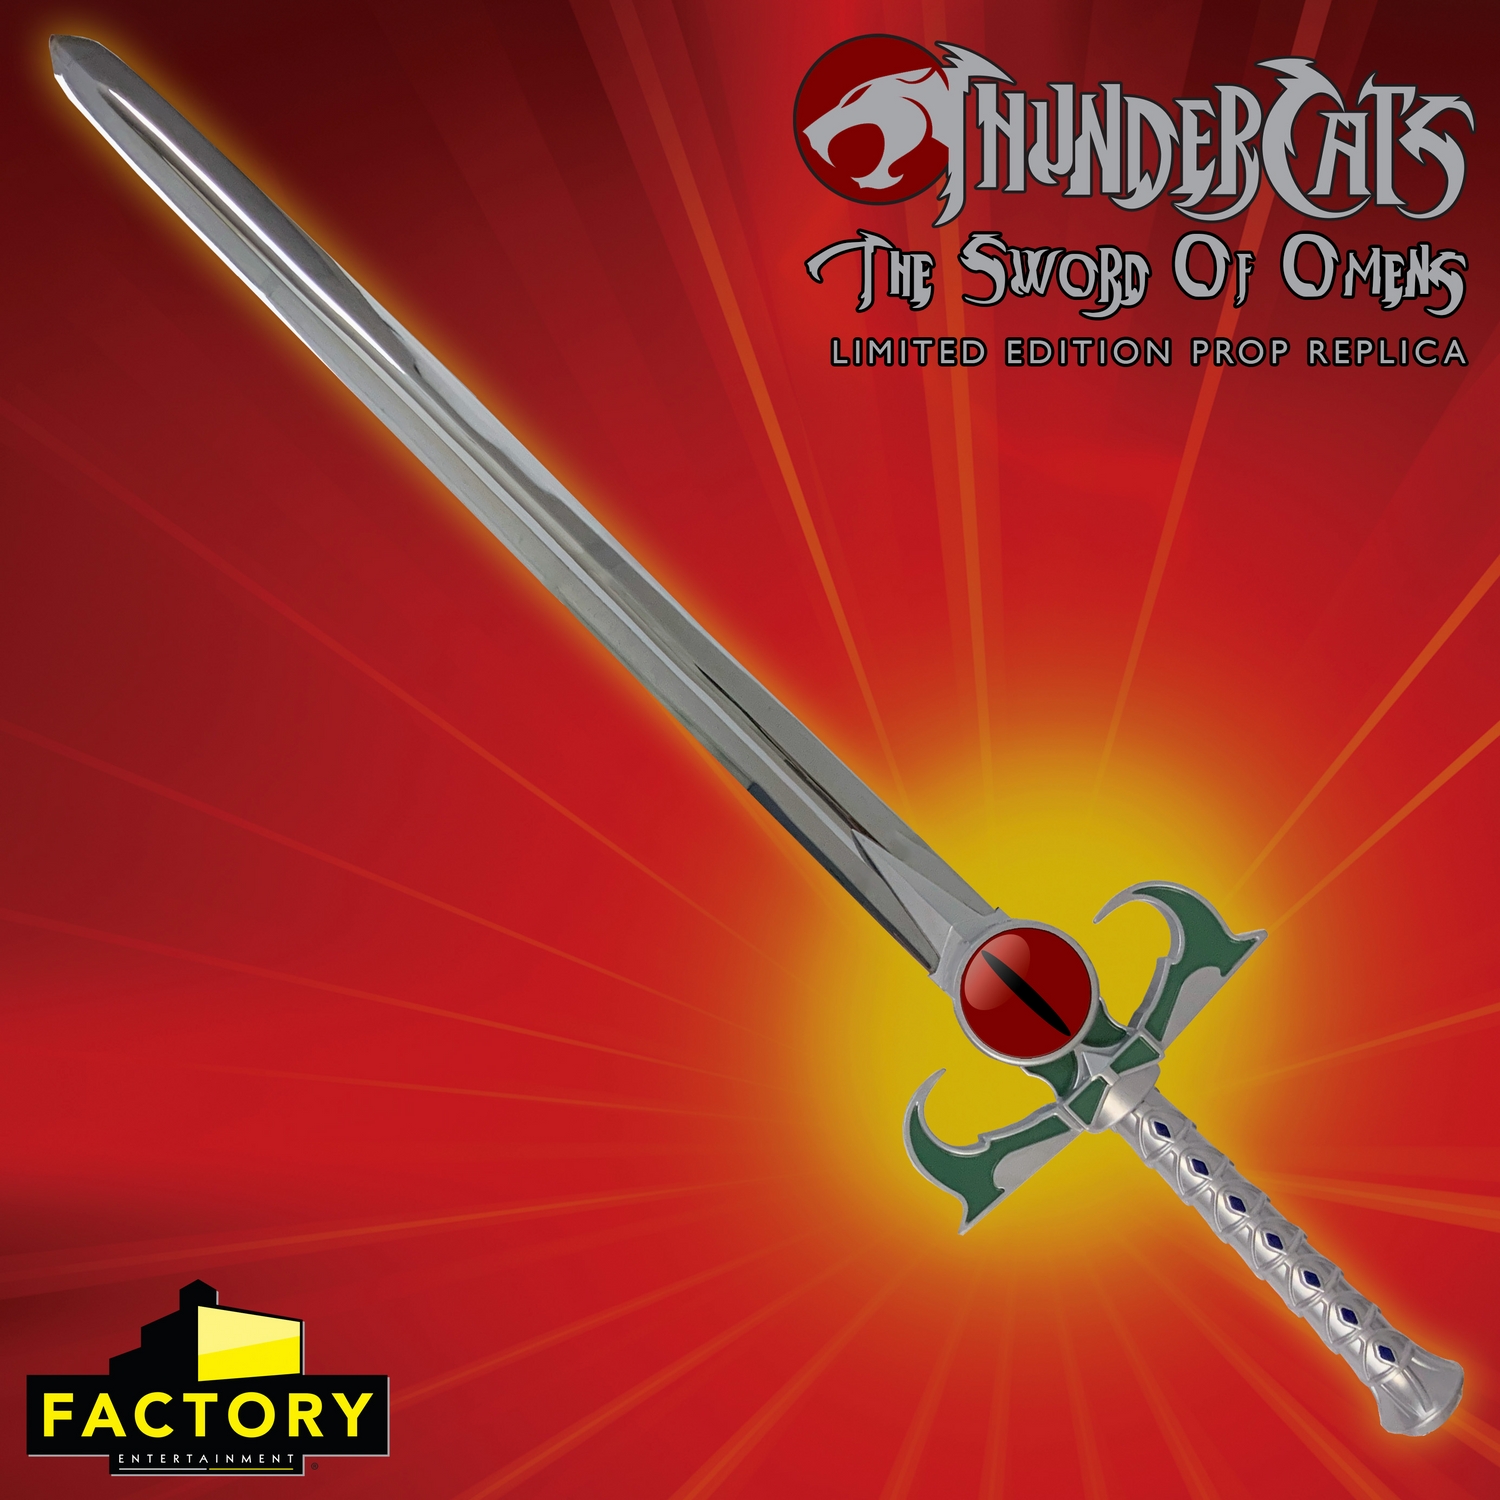 Web-sword-of-omens-thundercats-vanity-001.jpg